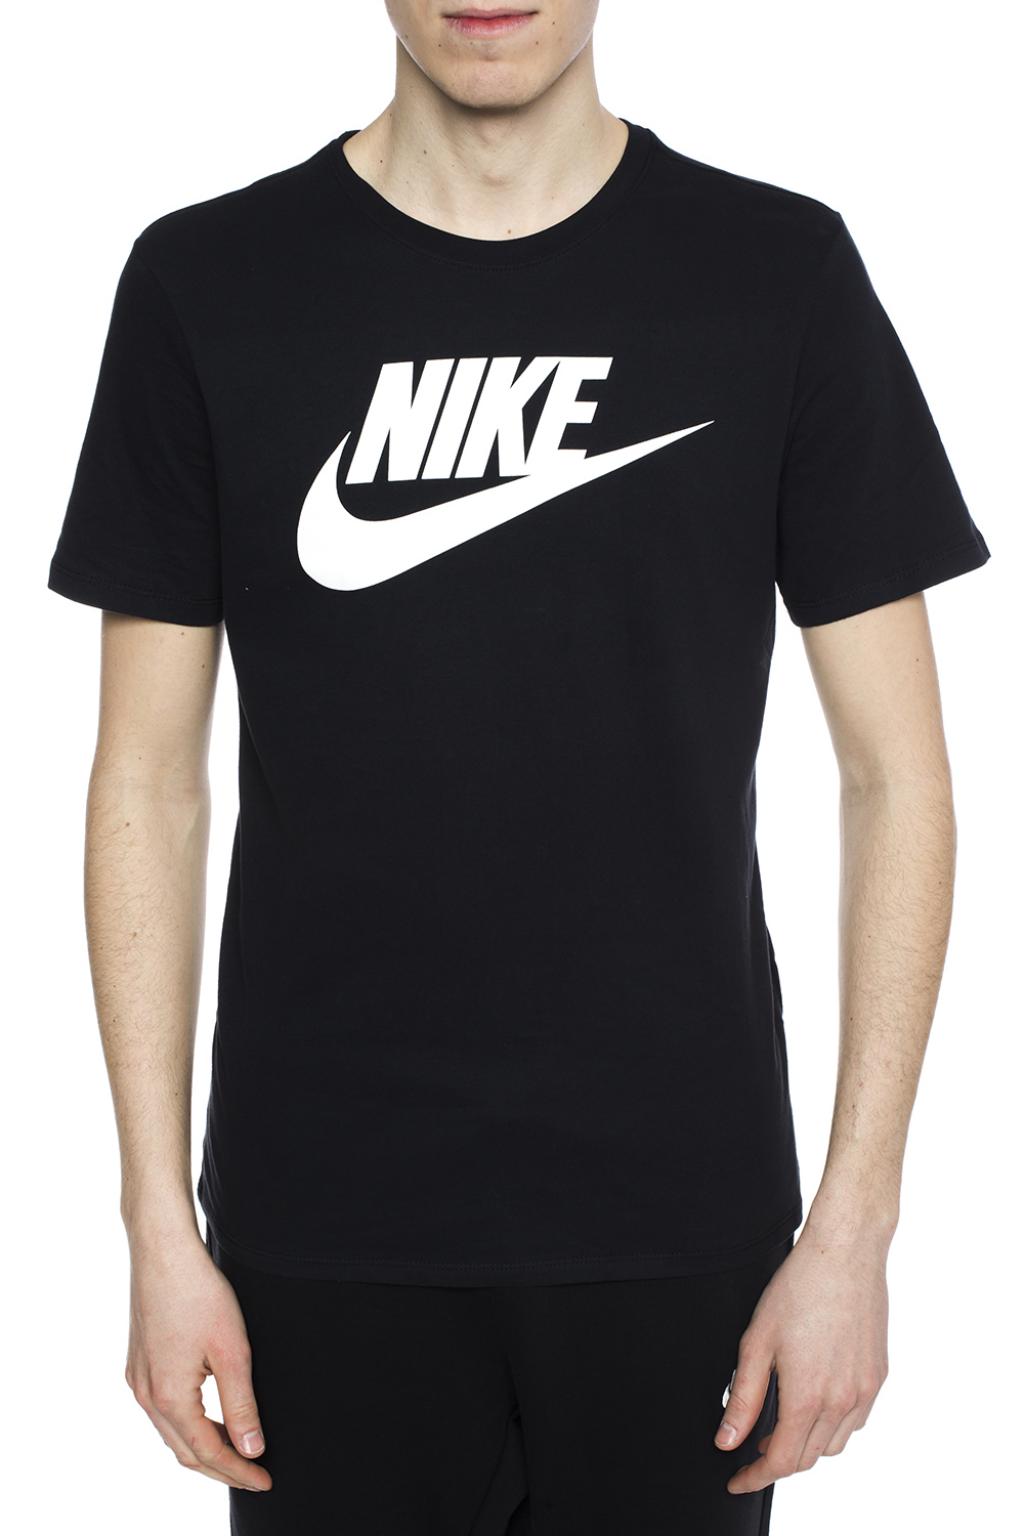 黑色Logo-printed T-shirt Nike - Vitkac 中国